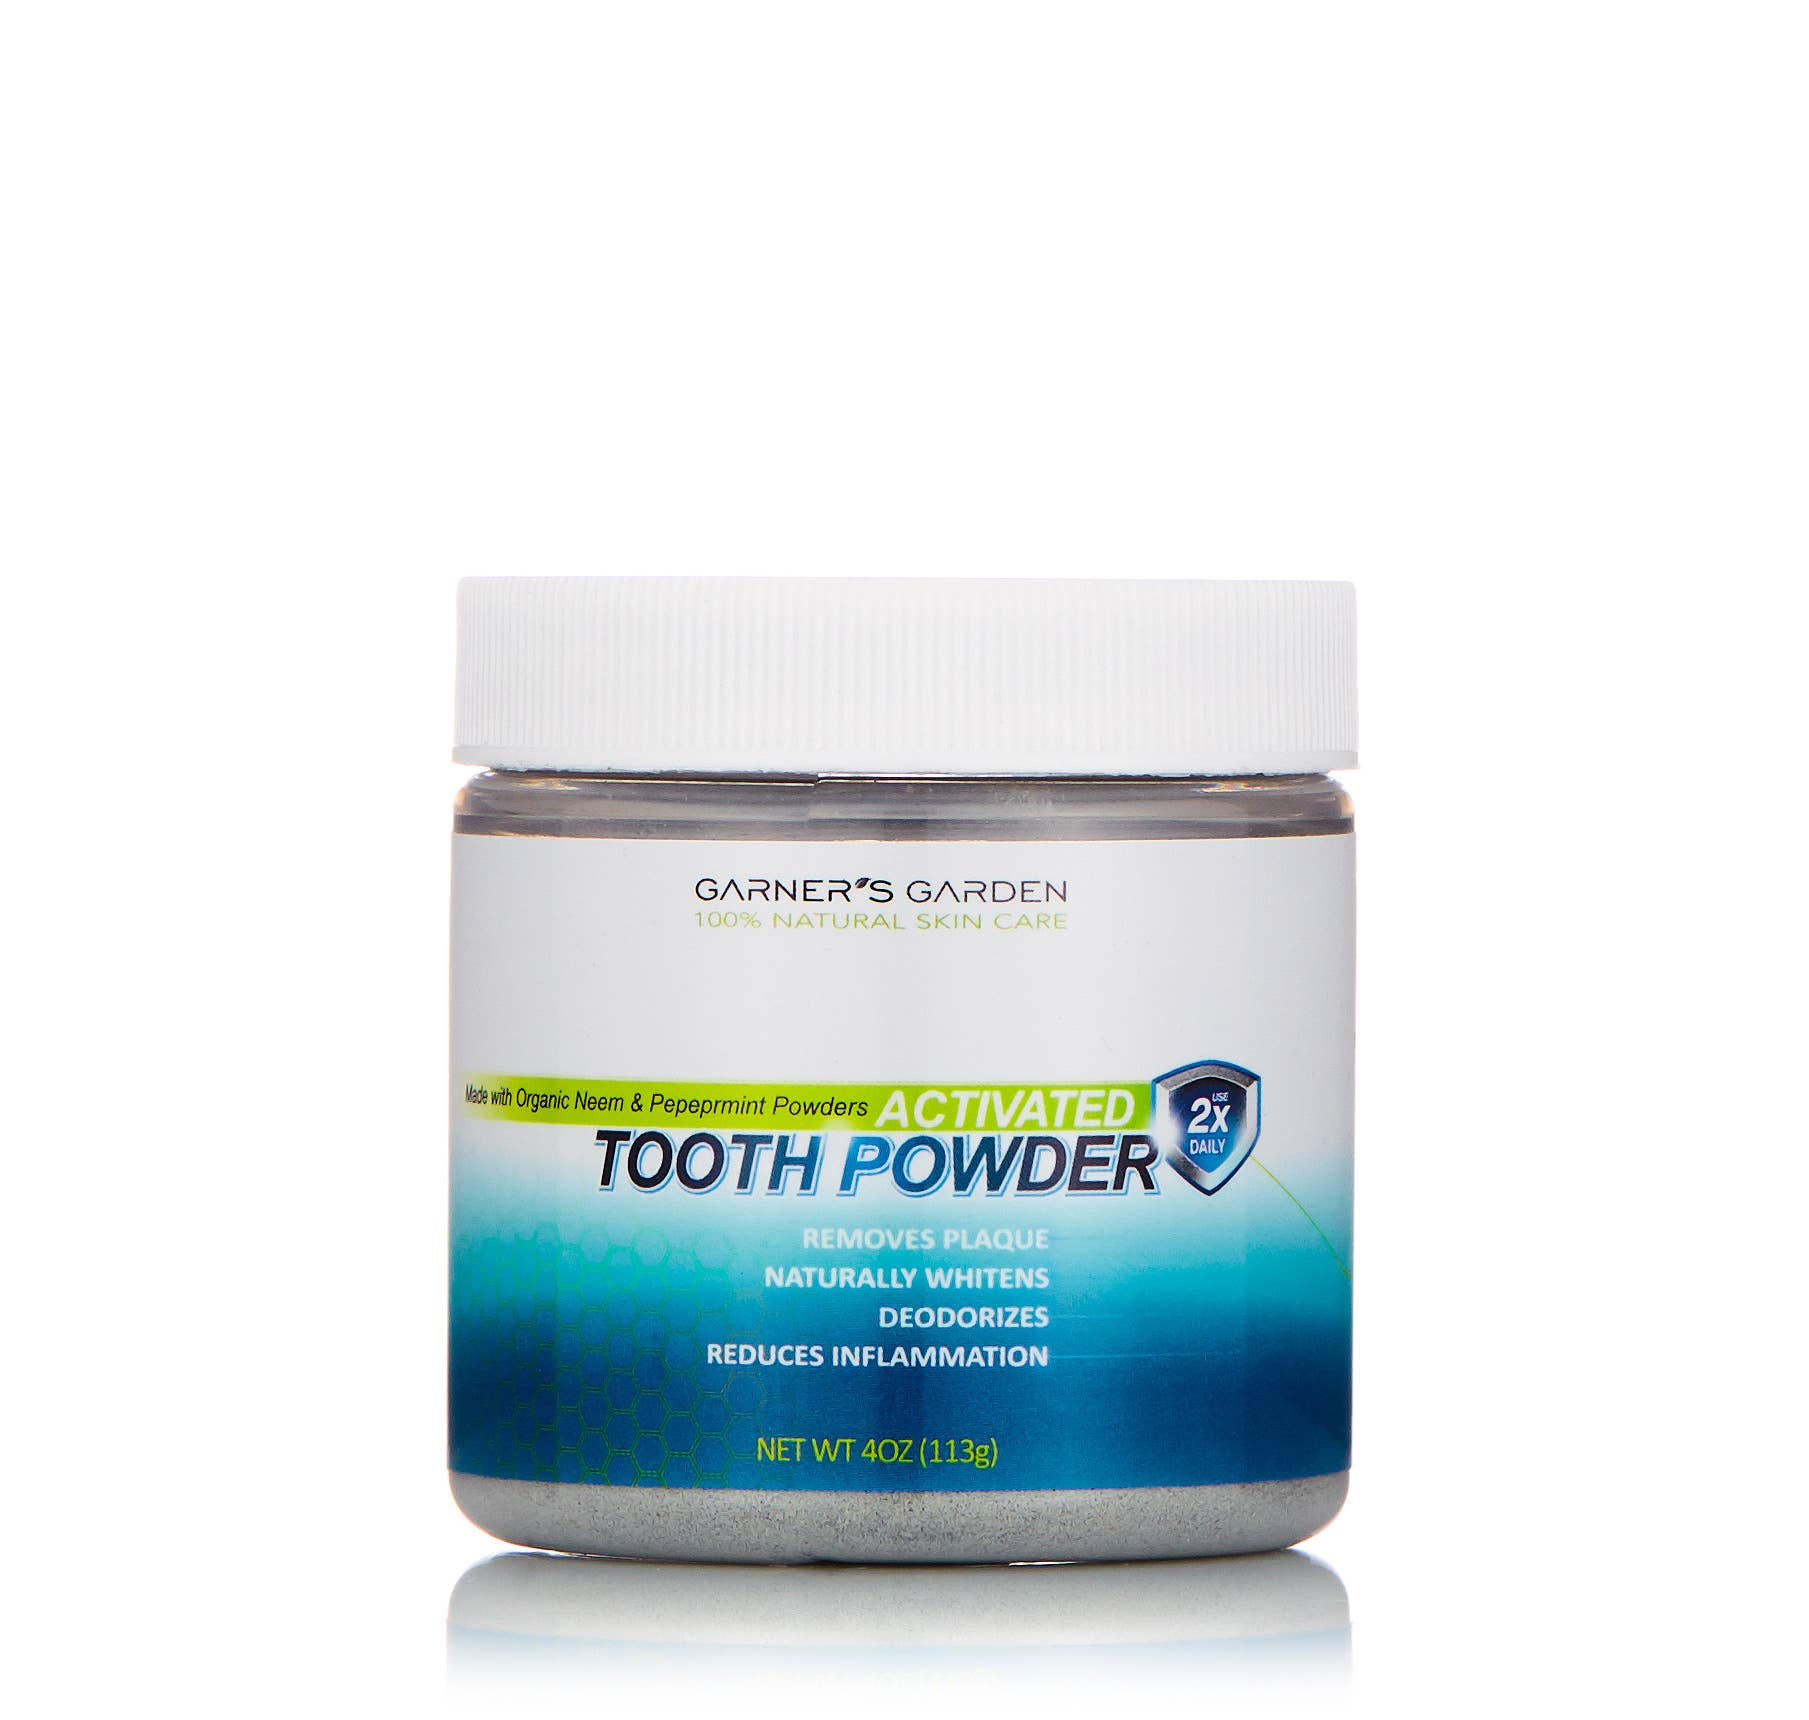 4 oz Tooth Powder